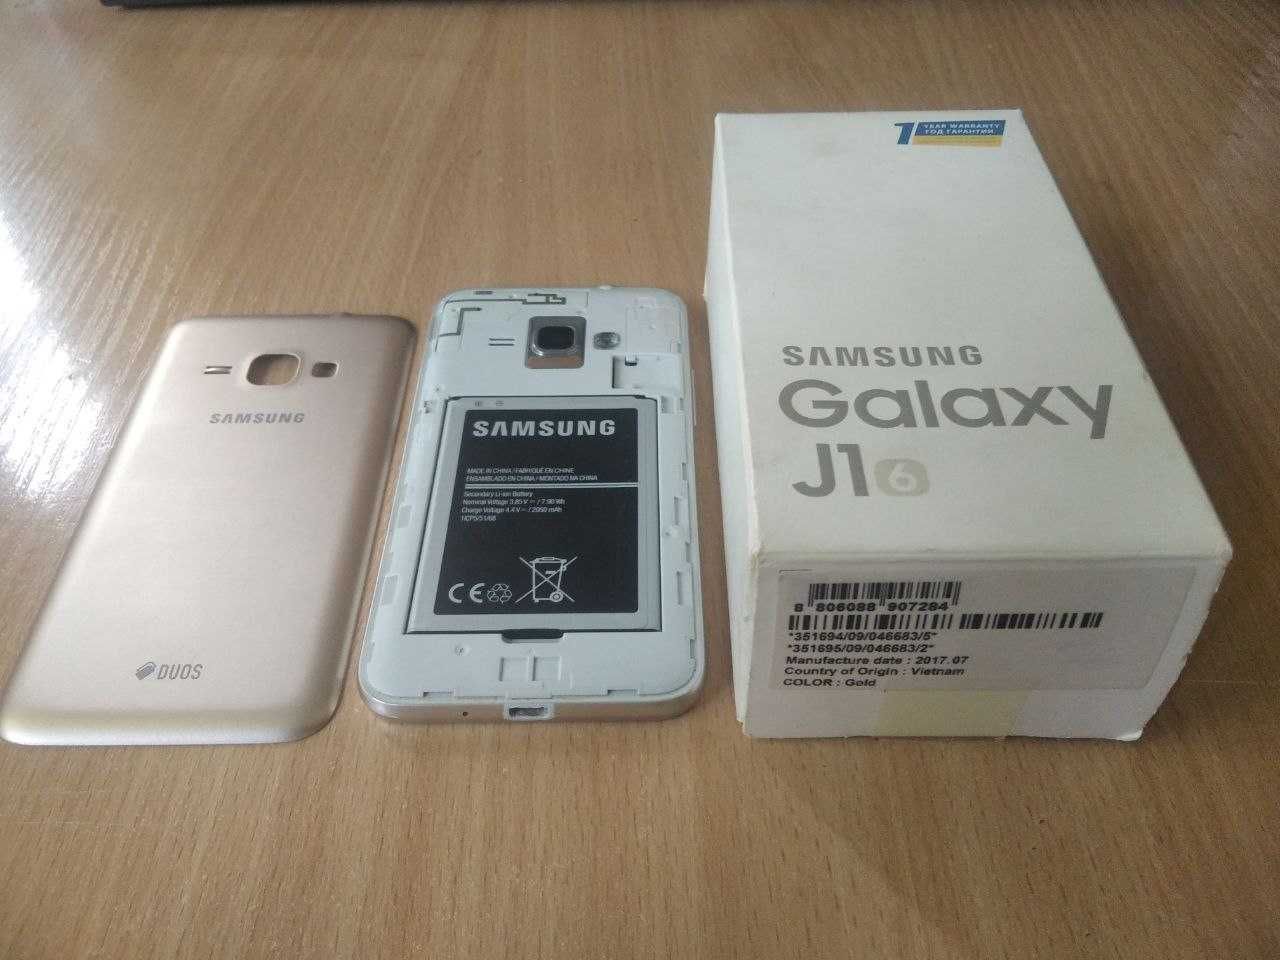 Samsung Galaxy J1 на запчасти,плата и батарейка работает.